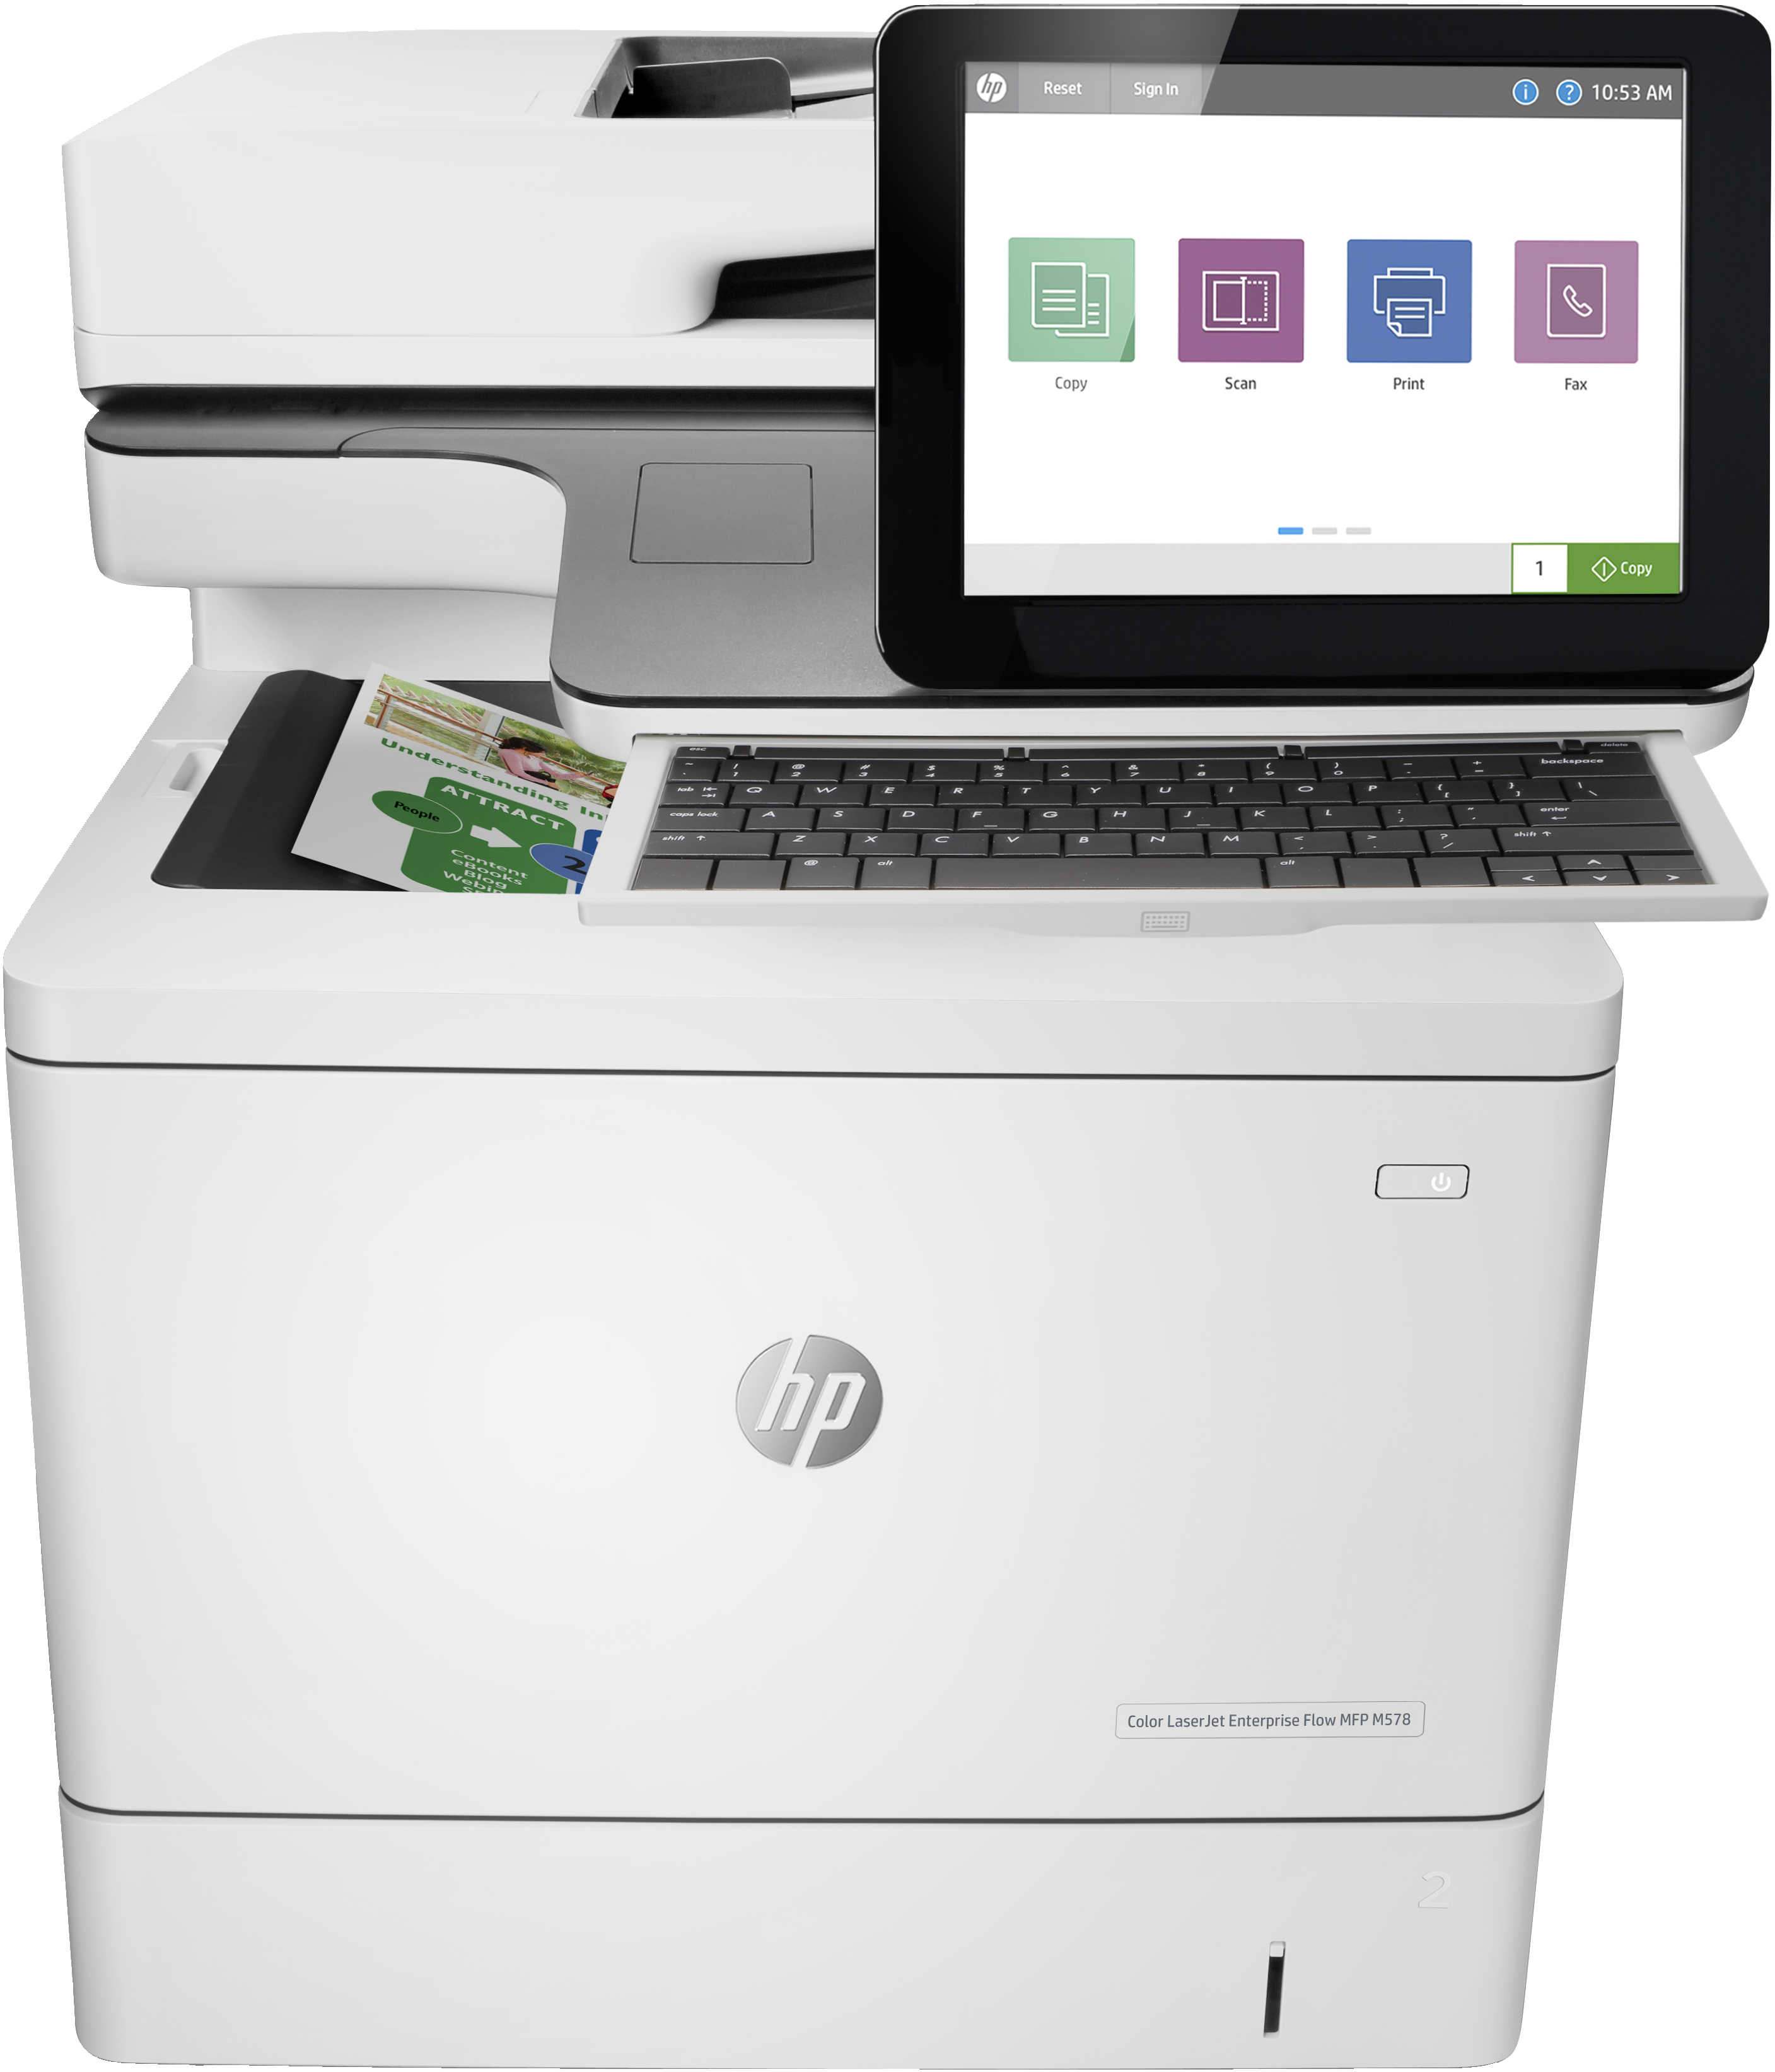 HP Color LaserJet Enterprise Flow MFP M578c, Skriv ut, kopiera, skanna, fax, Dubbelsidig utskrift; 100-arks ADF; Energieffektiv